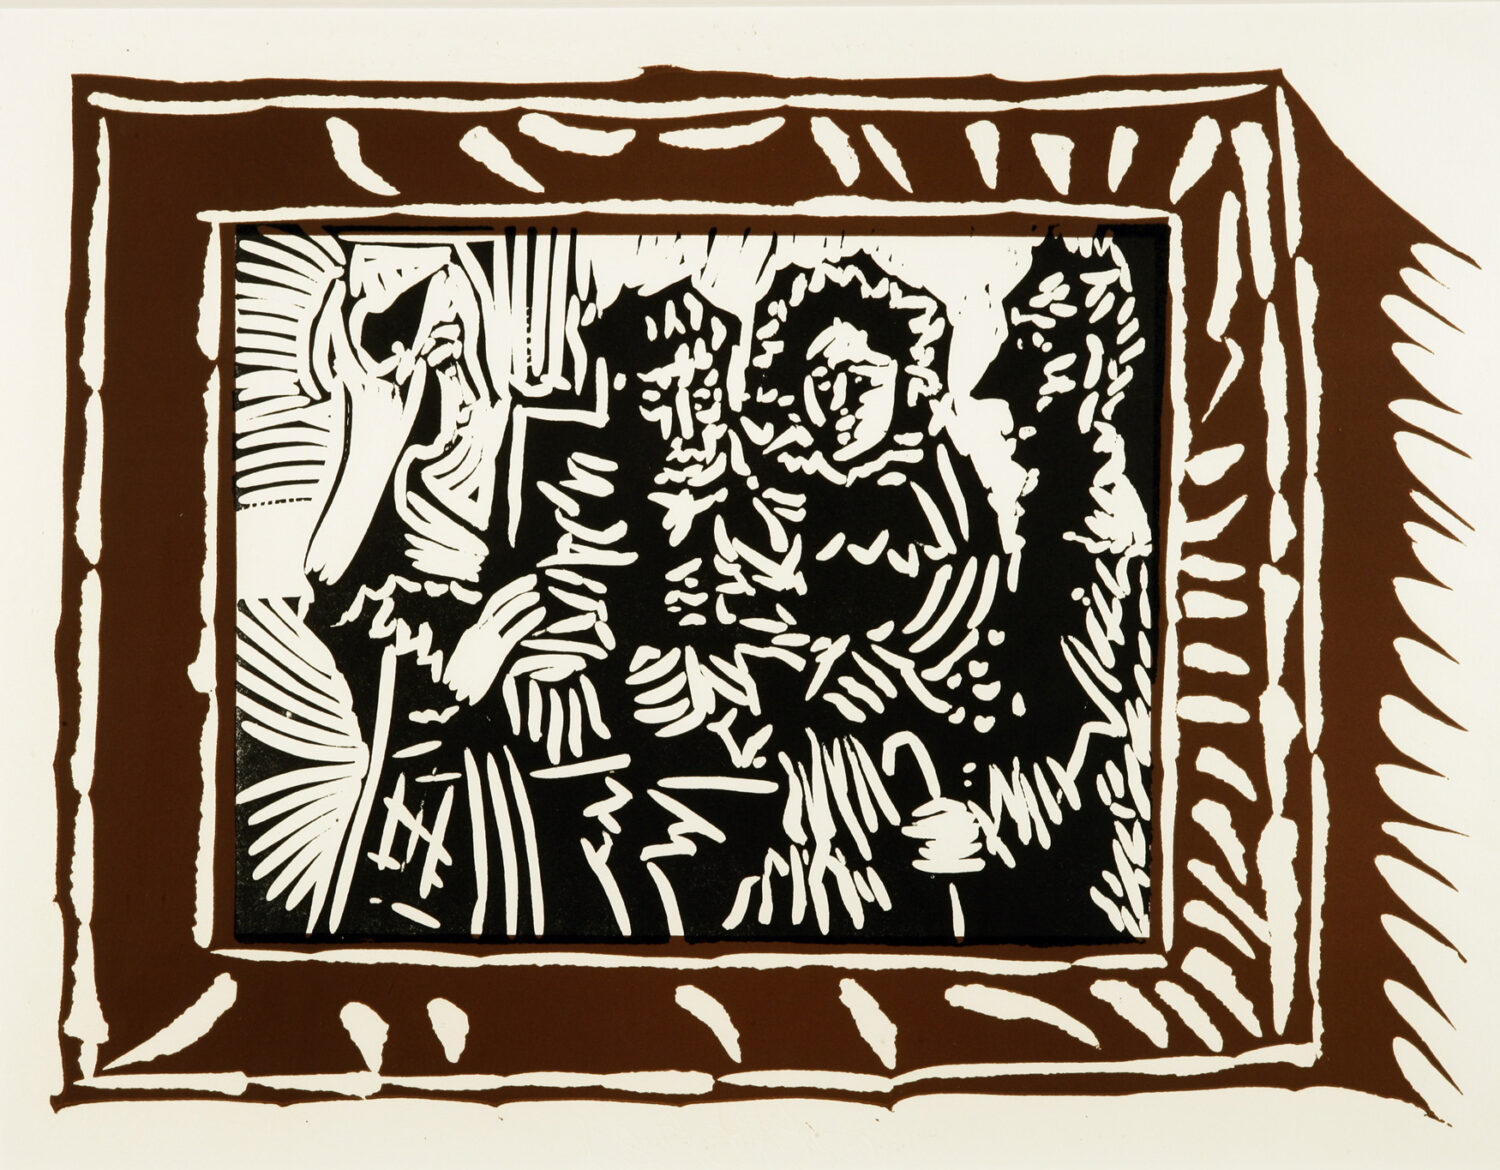 thumbnail of Lino-cut by Pablo Picasso titled Portrait de Famille Ingresque IV.